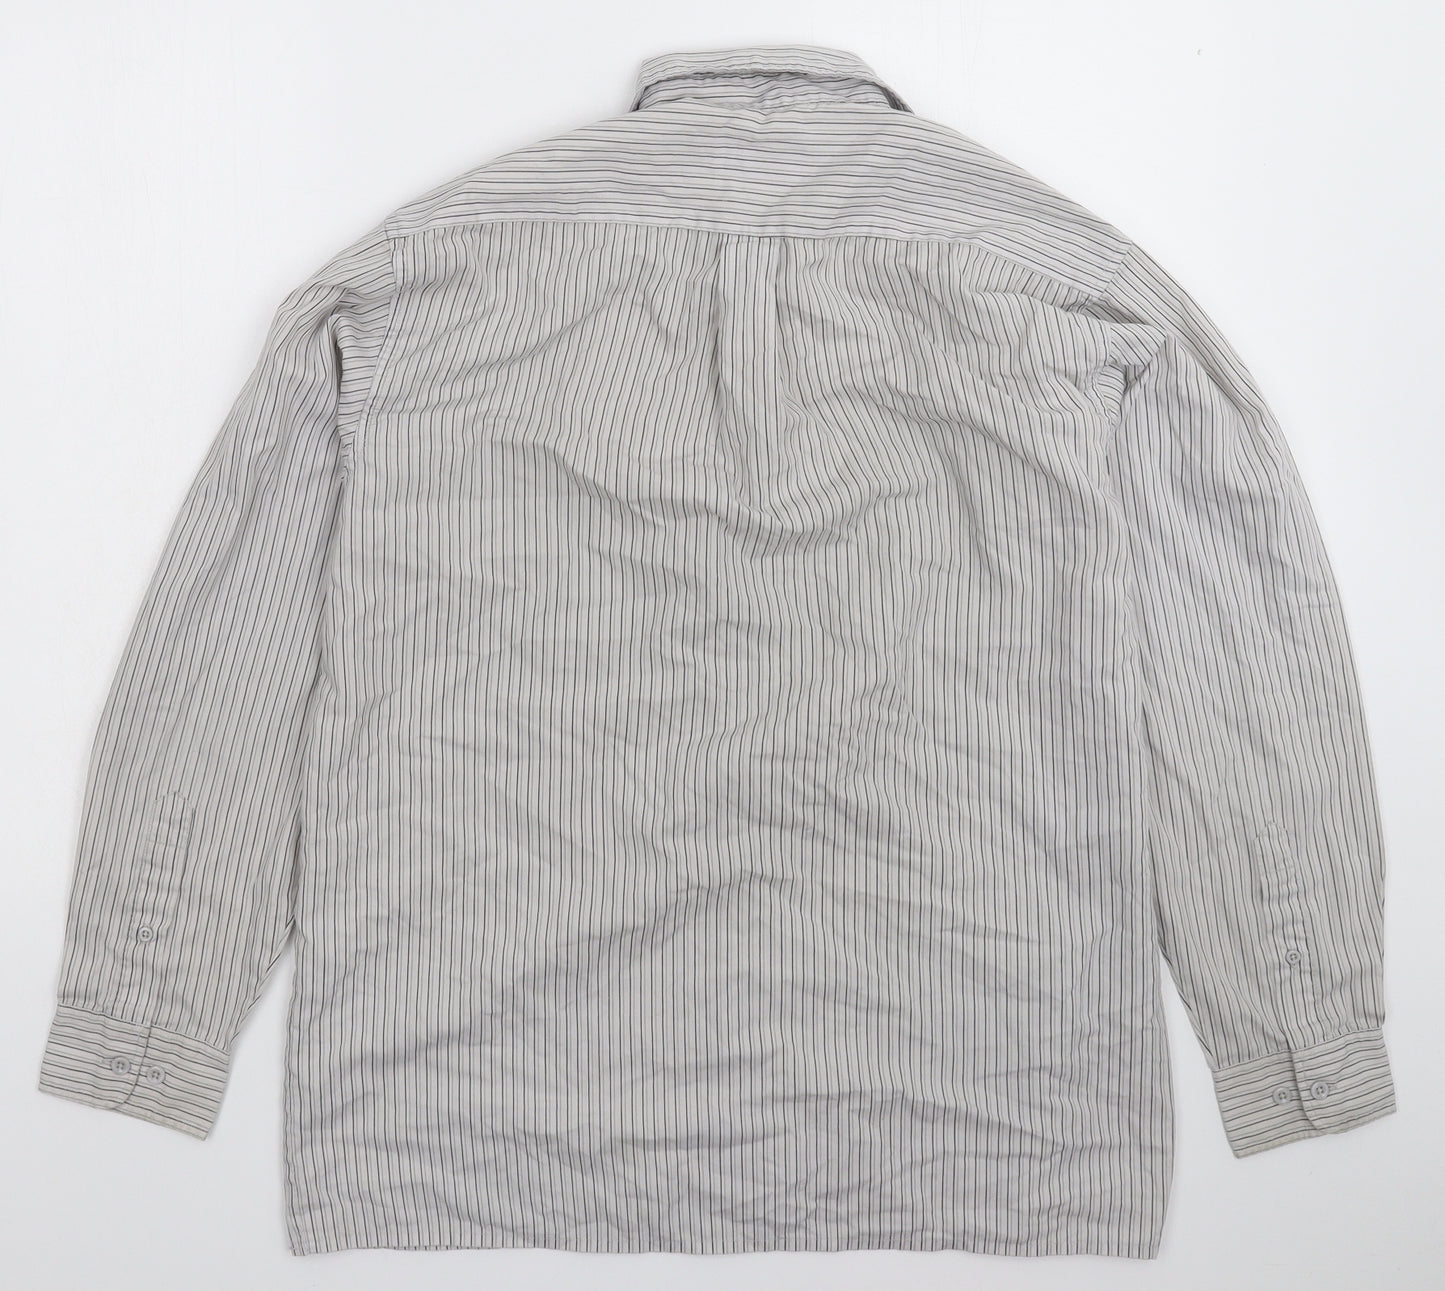 Headland Mens Grey Striped   Dress Shirt Size 15.5